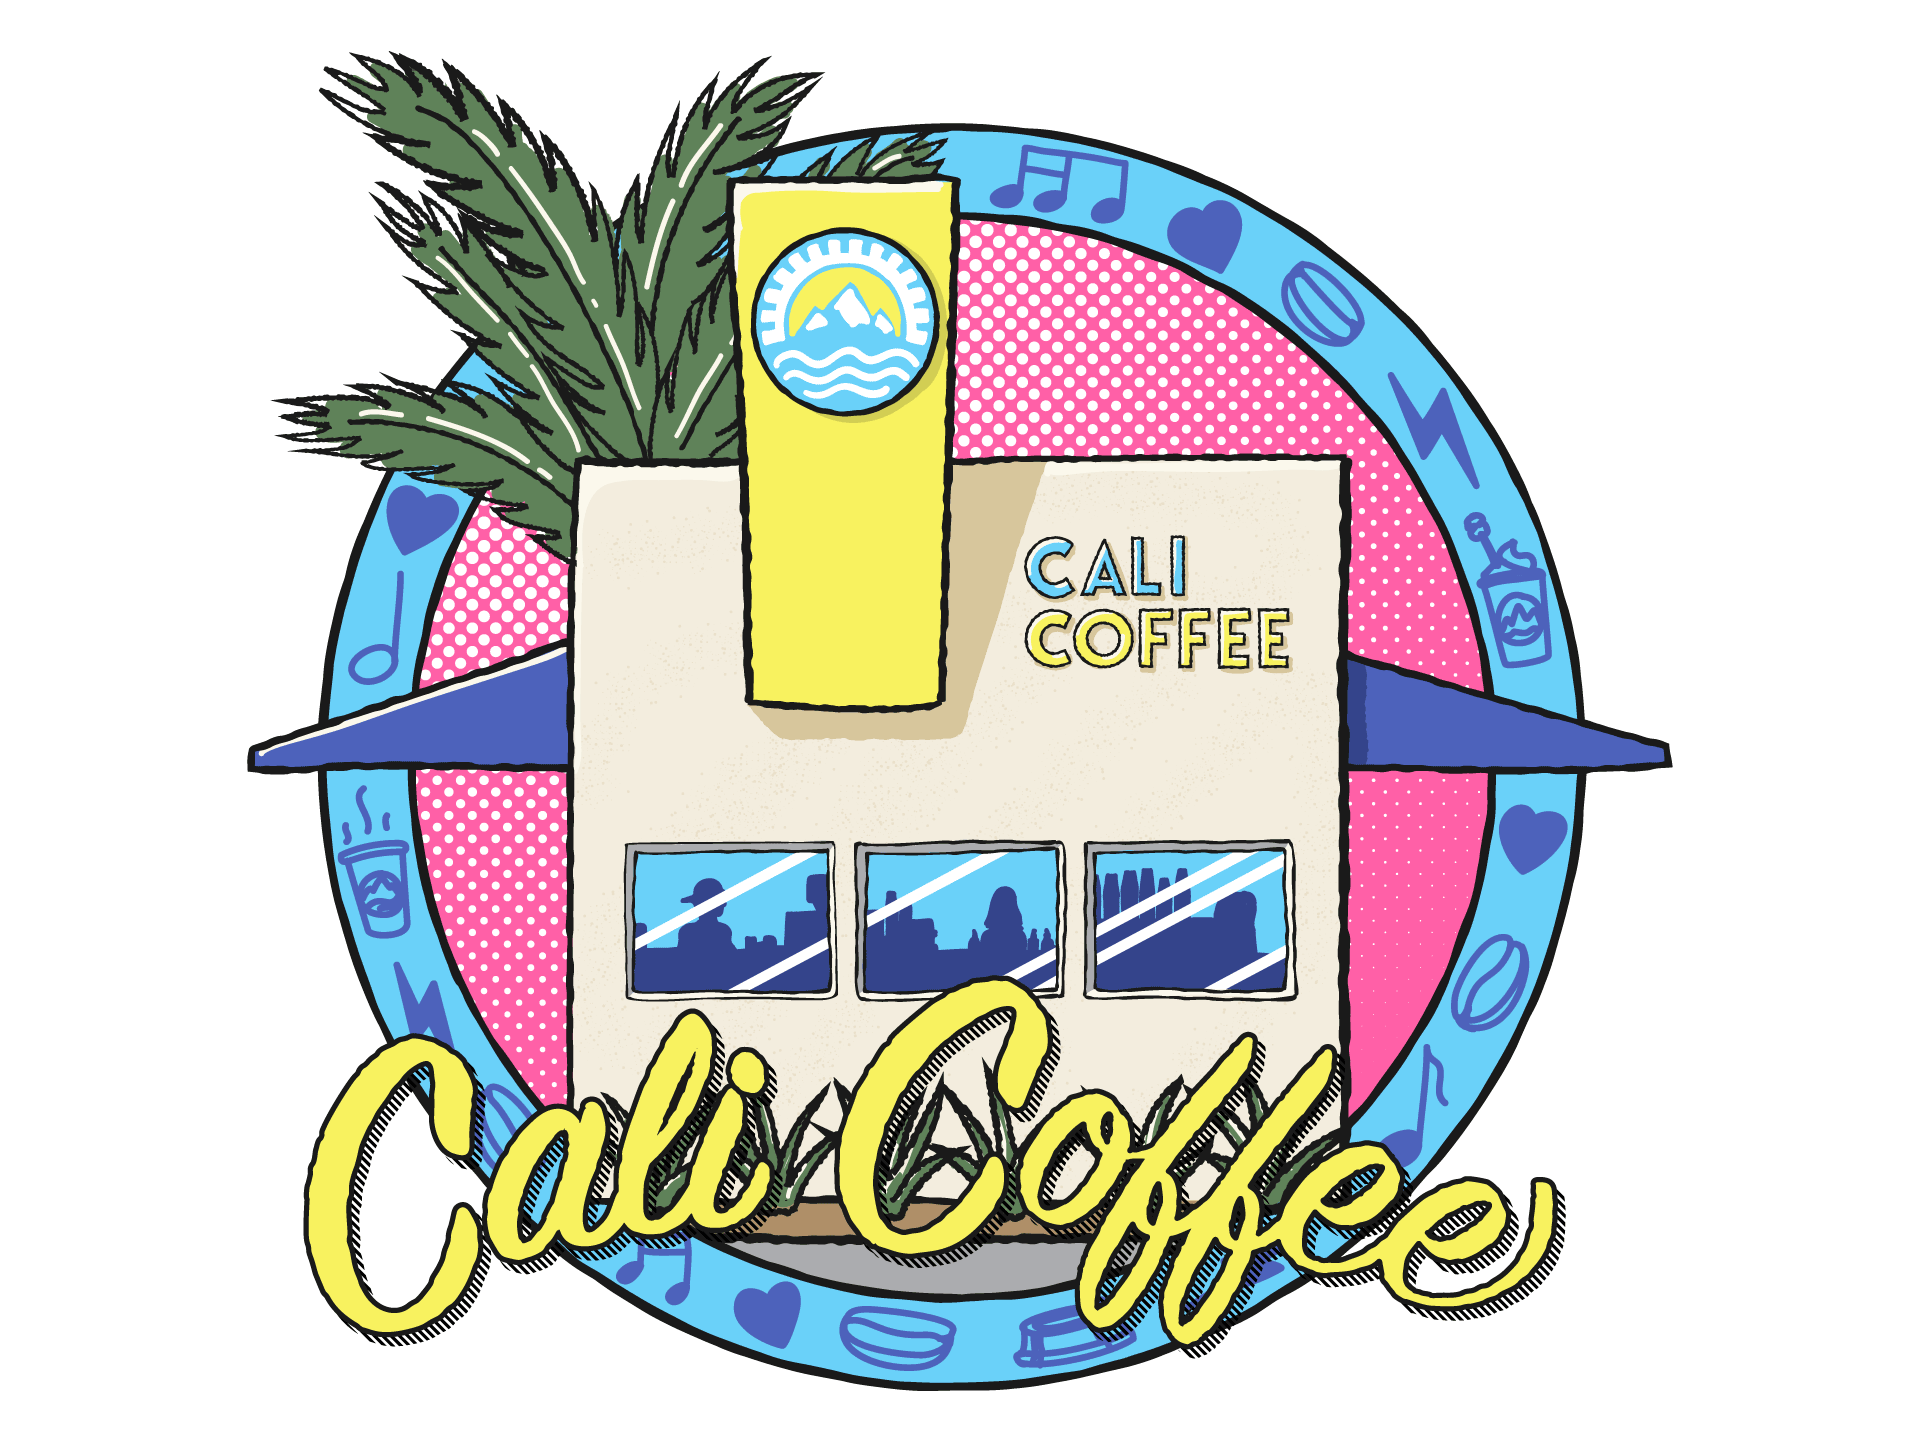 Cali Coffee Shop Illustration